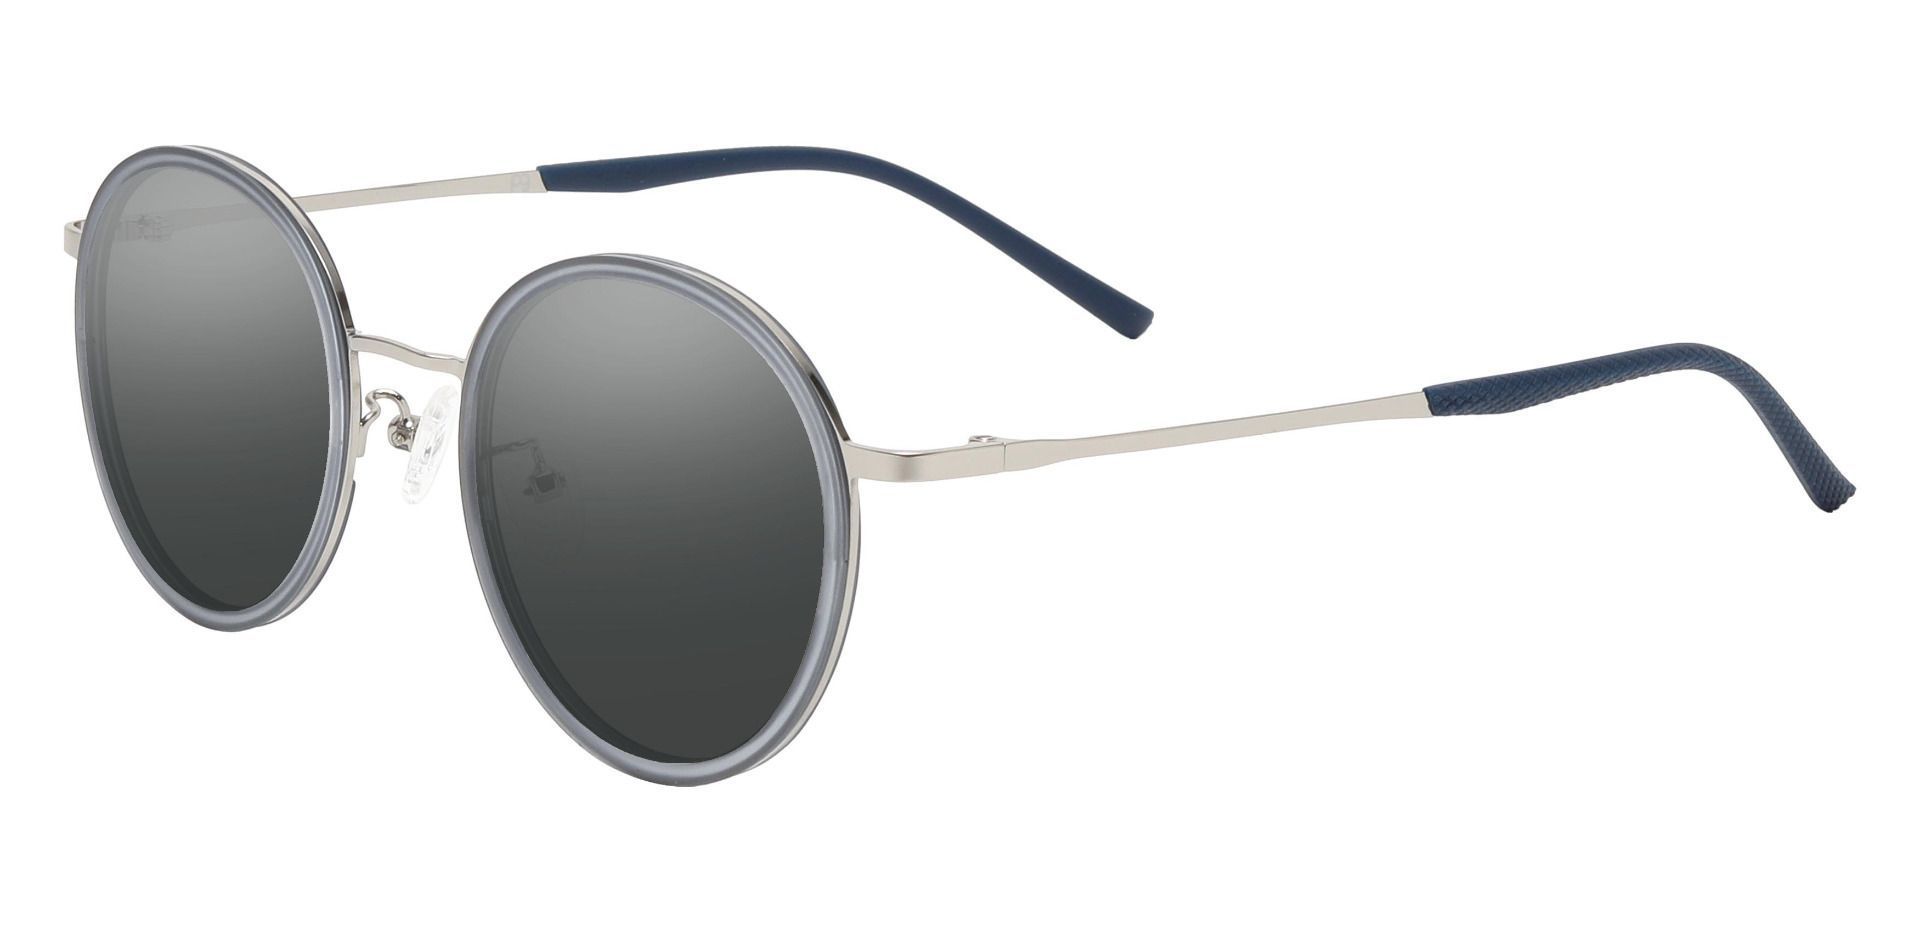 Brunswick Round Reading Sunglasses - Gray Frame With Gray Lenses